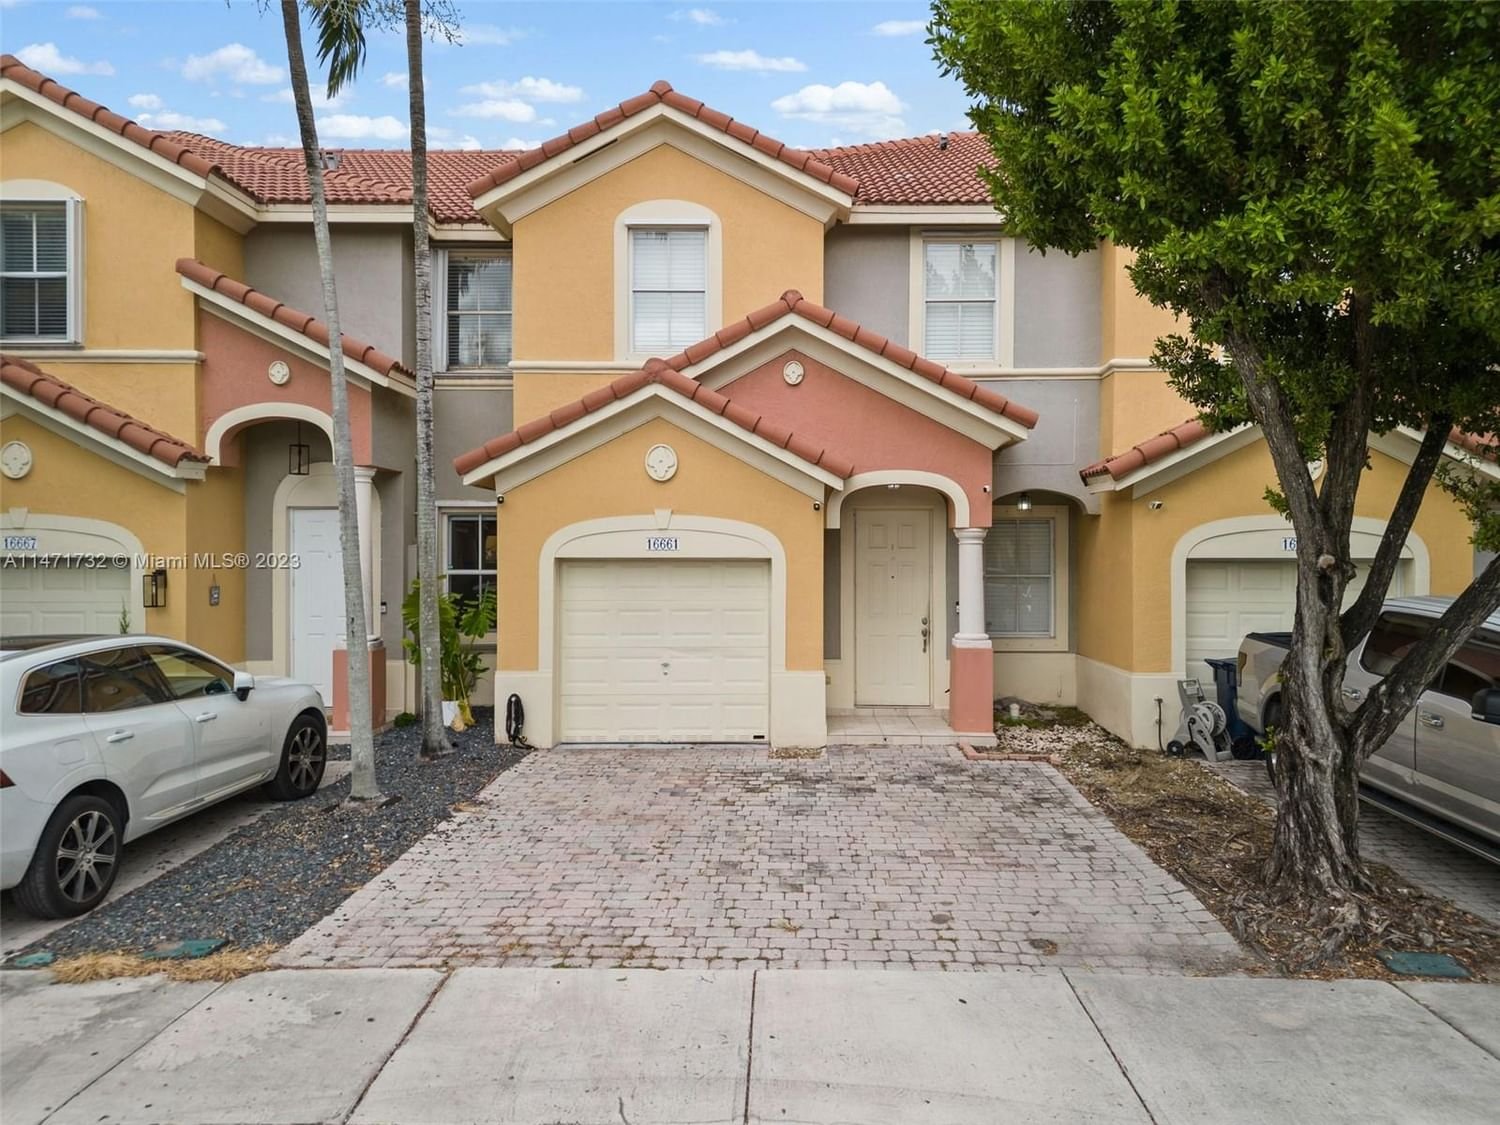 Real estate property located at 16661 84th Ter, Miami-Dade County, KENDALLAND, Miami, FL